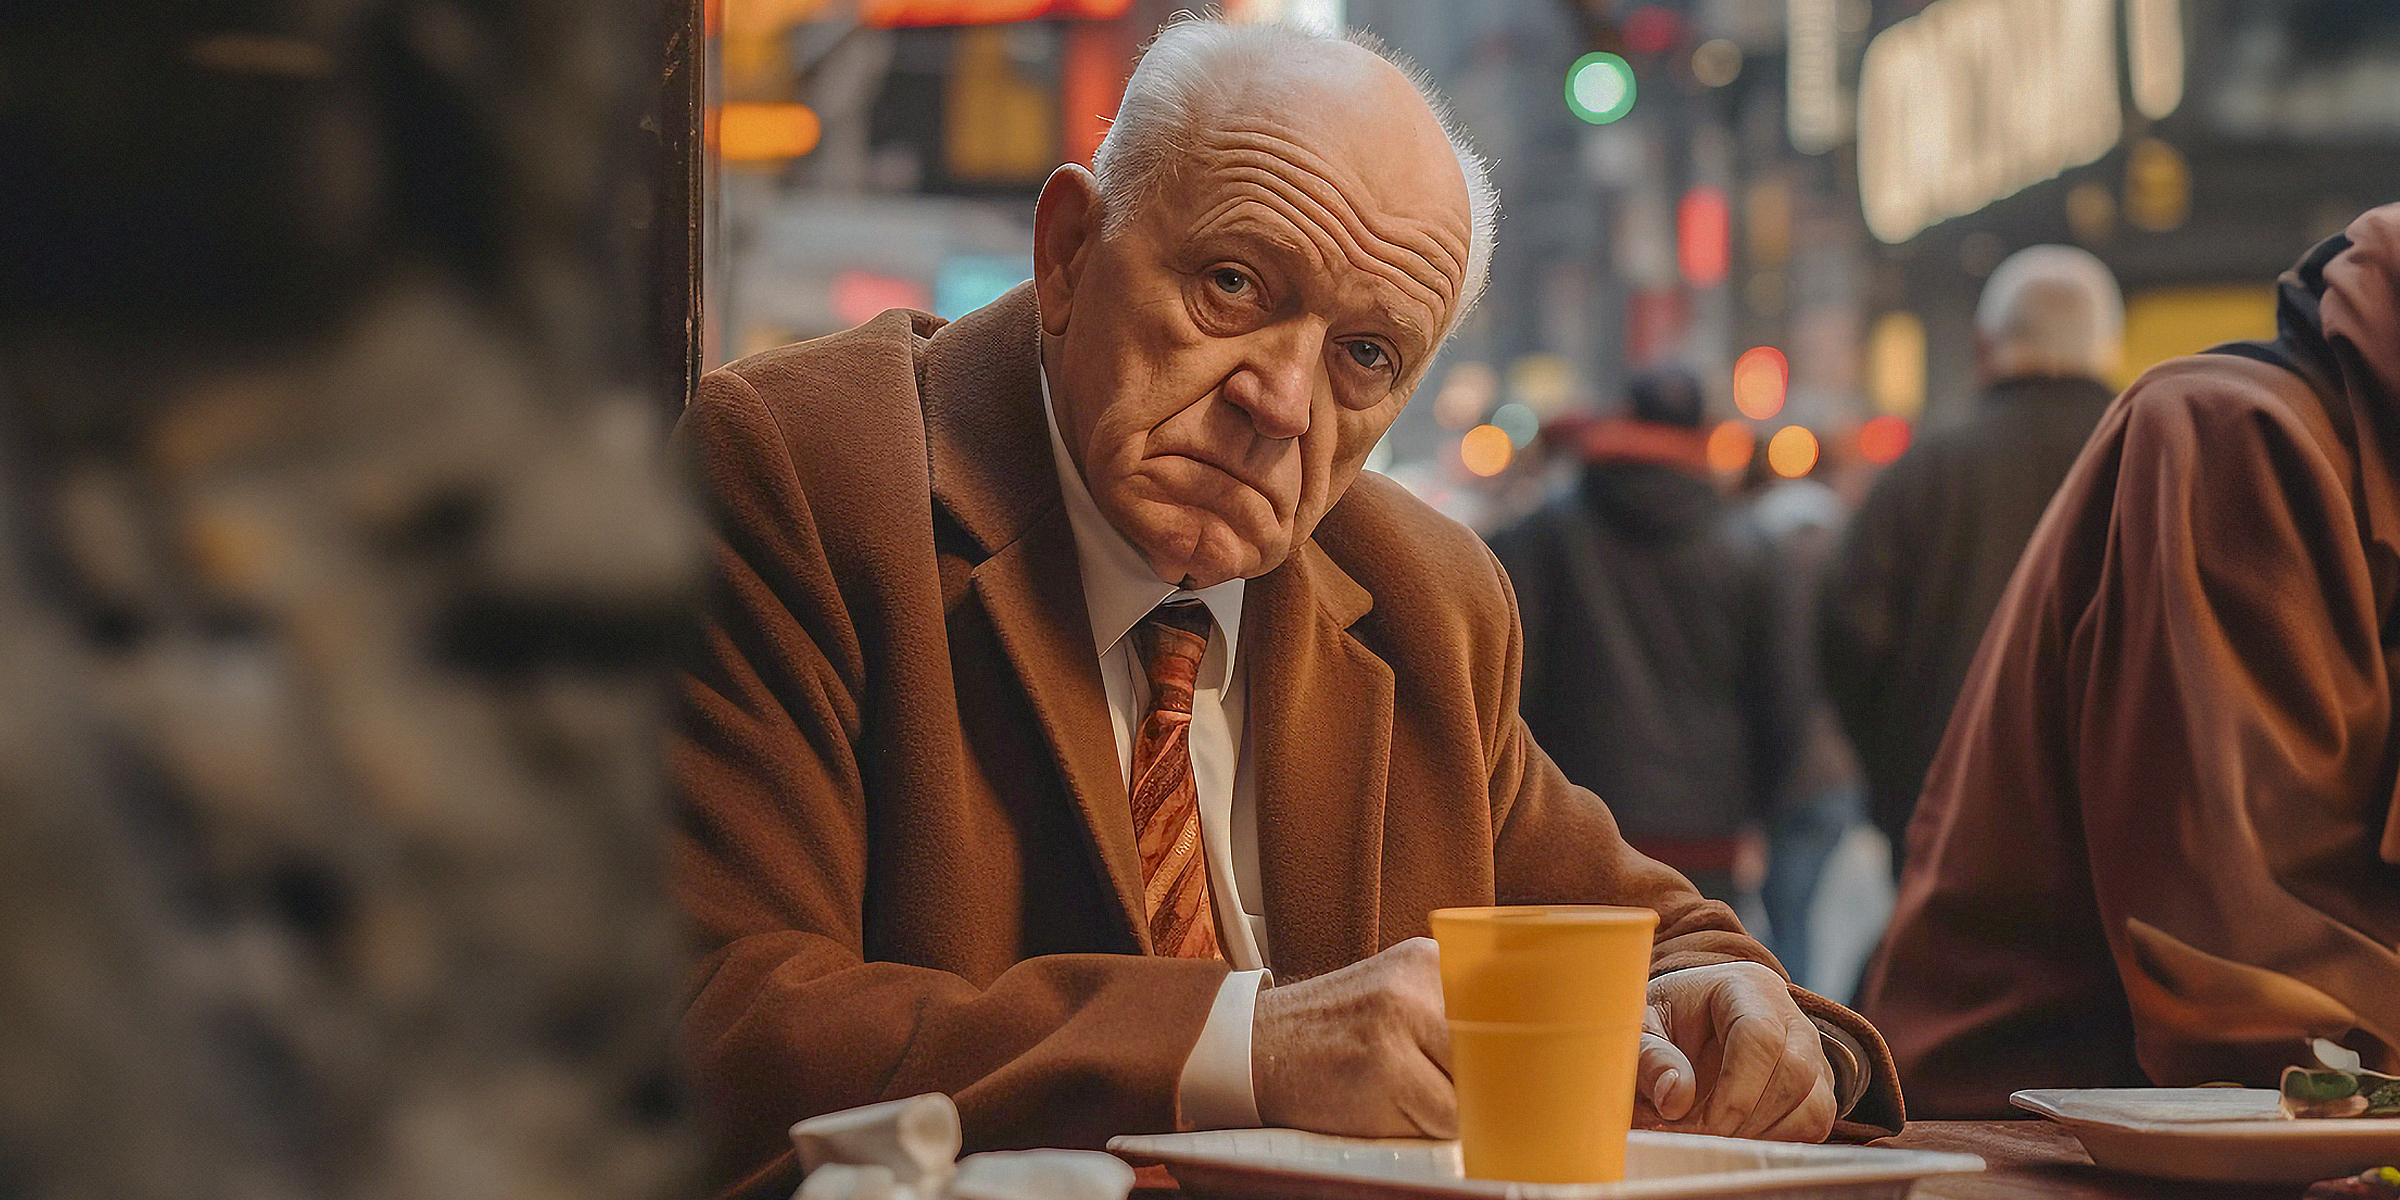 A sad grandfather sitting in a restaurant | Source: Freepik